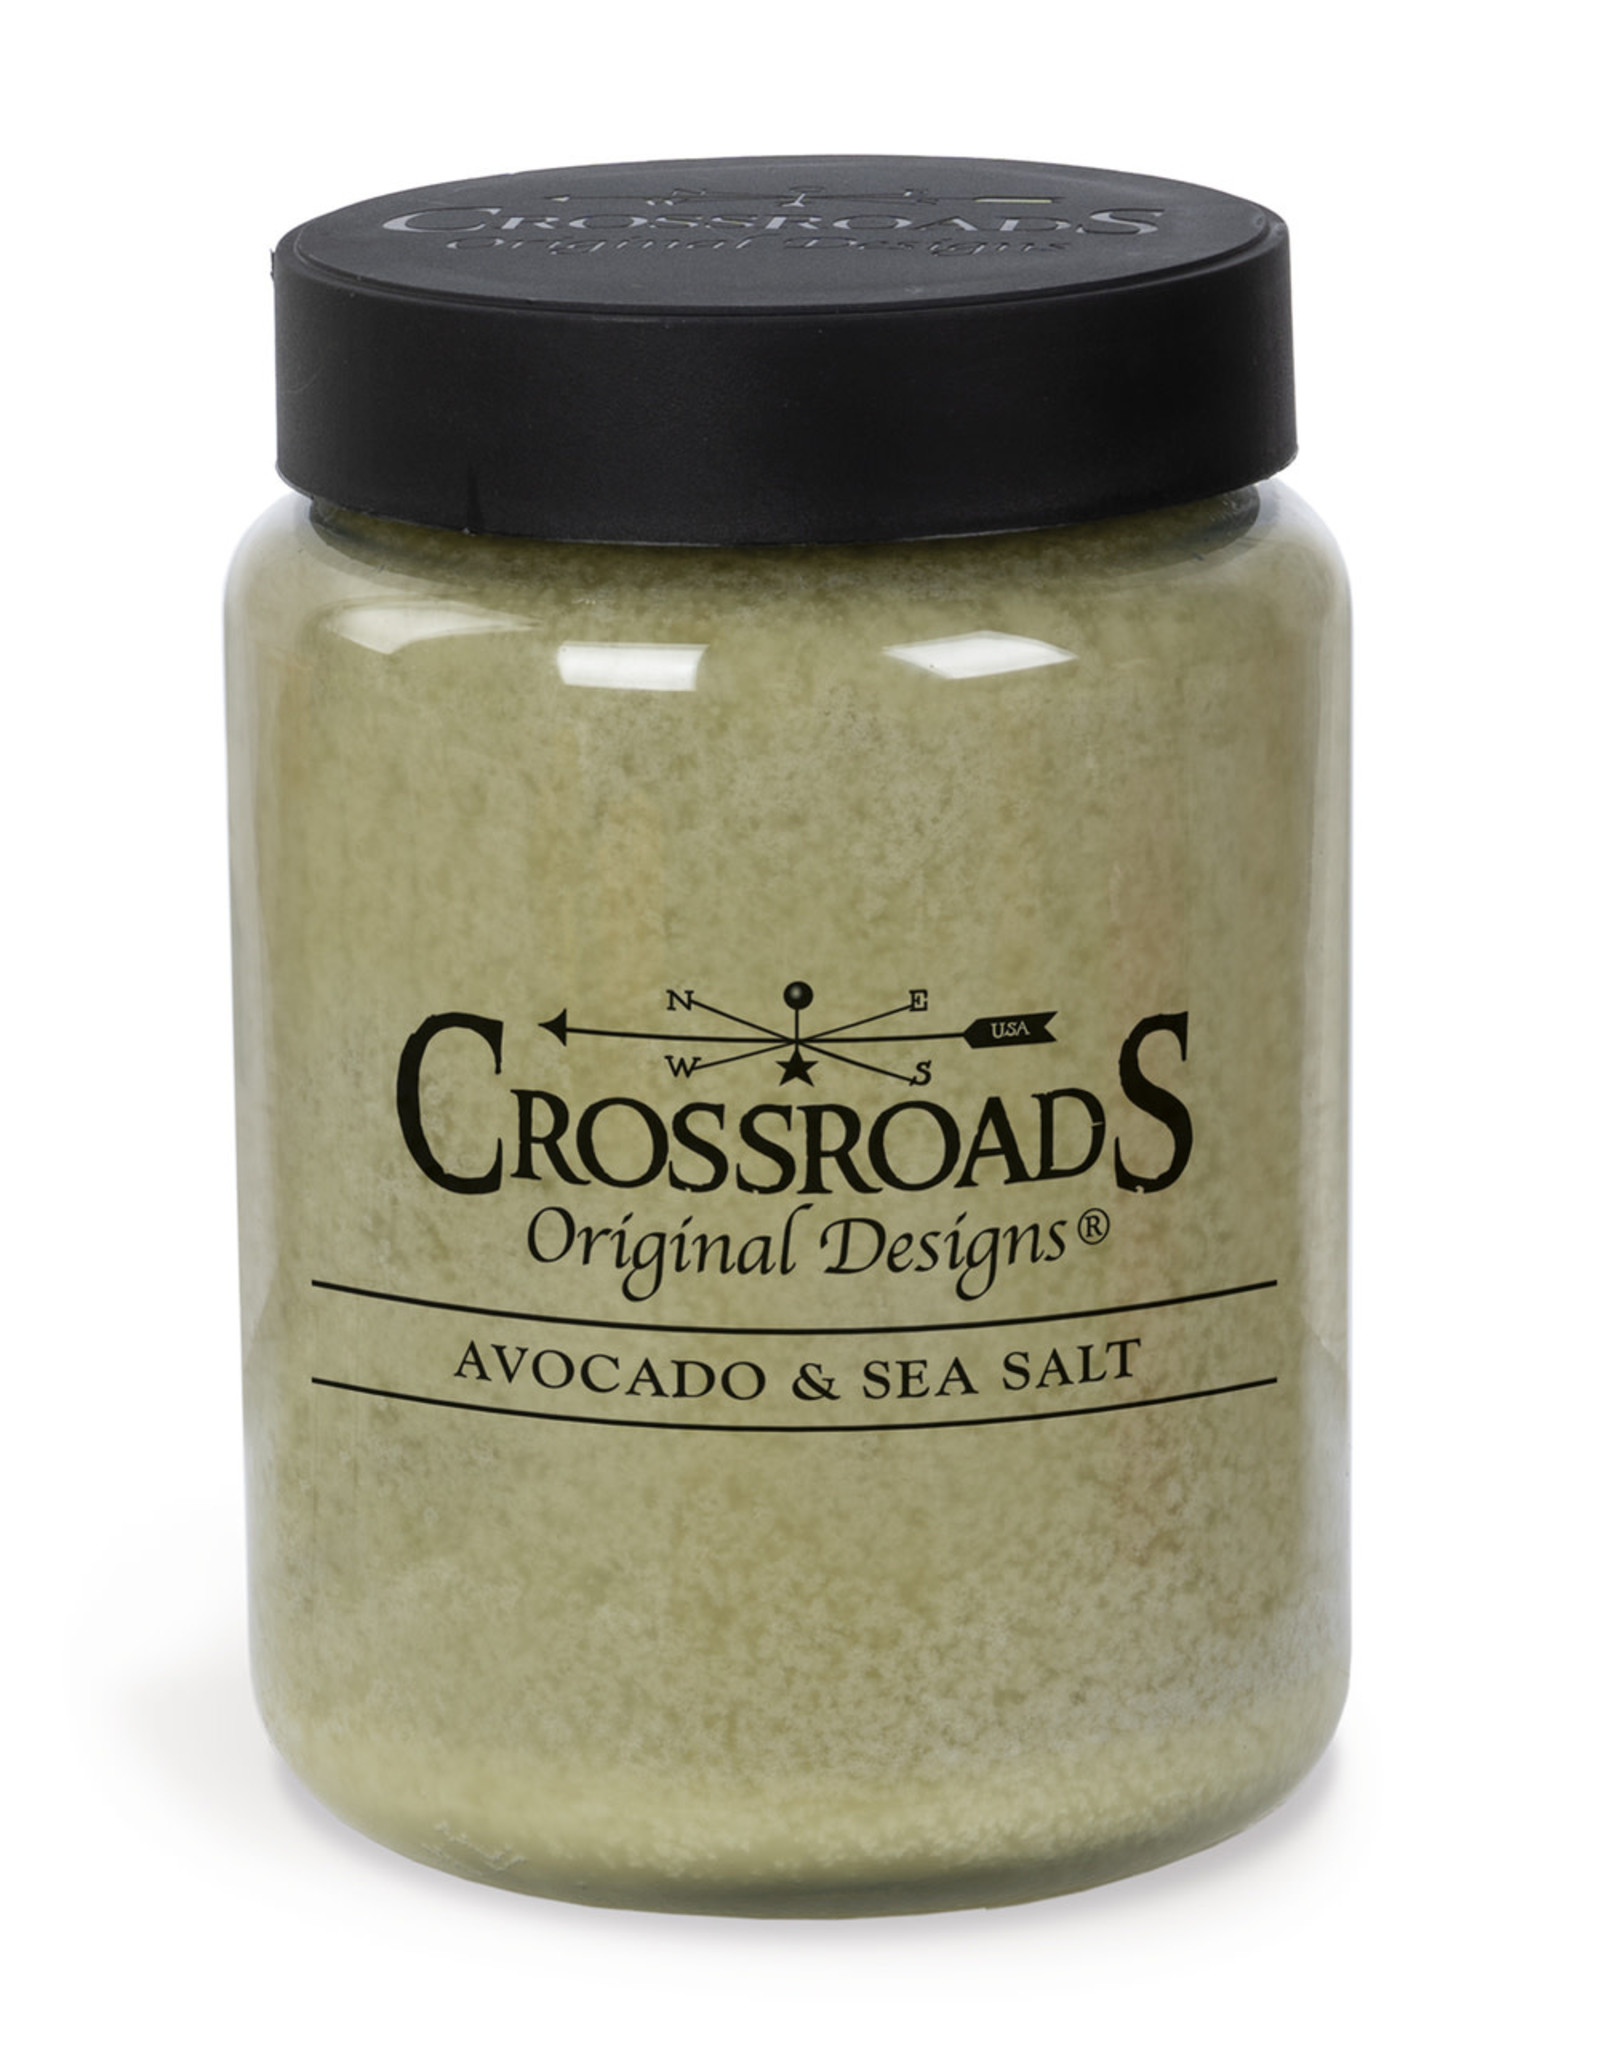 Crossroads Avocado and Sea Salt Candle